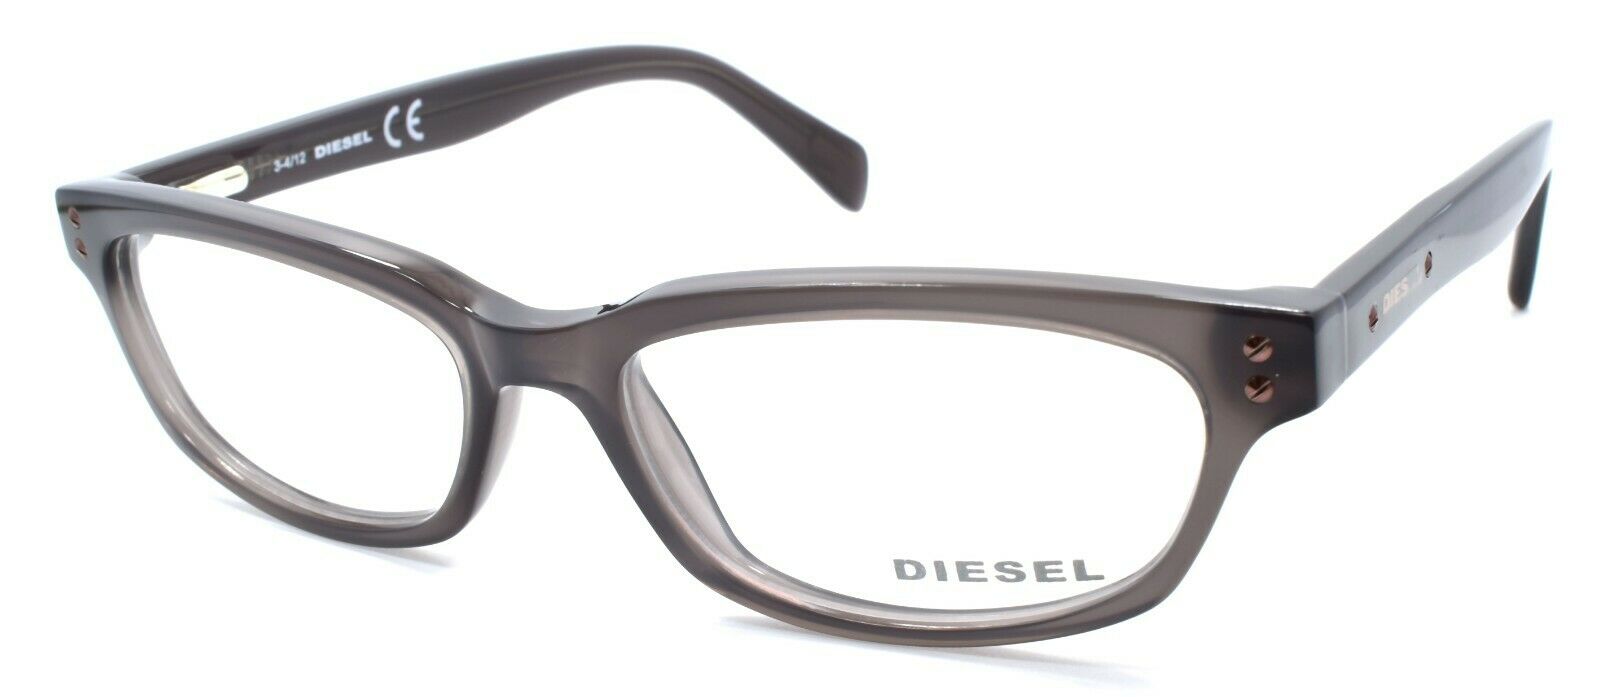 1-Diesel DL5038 020 Women's Eyeglasses Frames 52-16-140 Opal Dark Grey-664689575138-IKSpecs